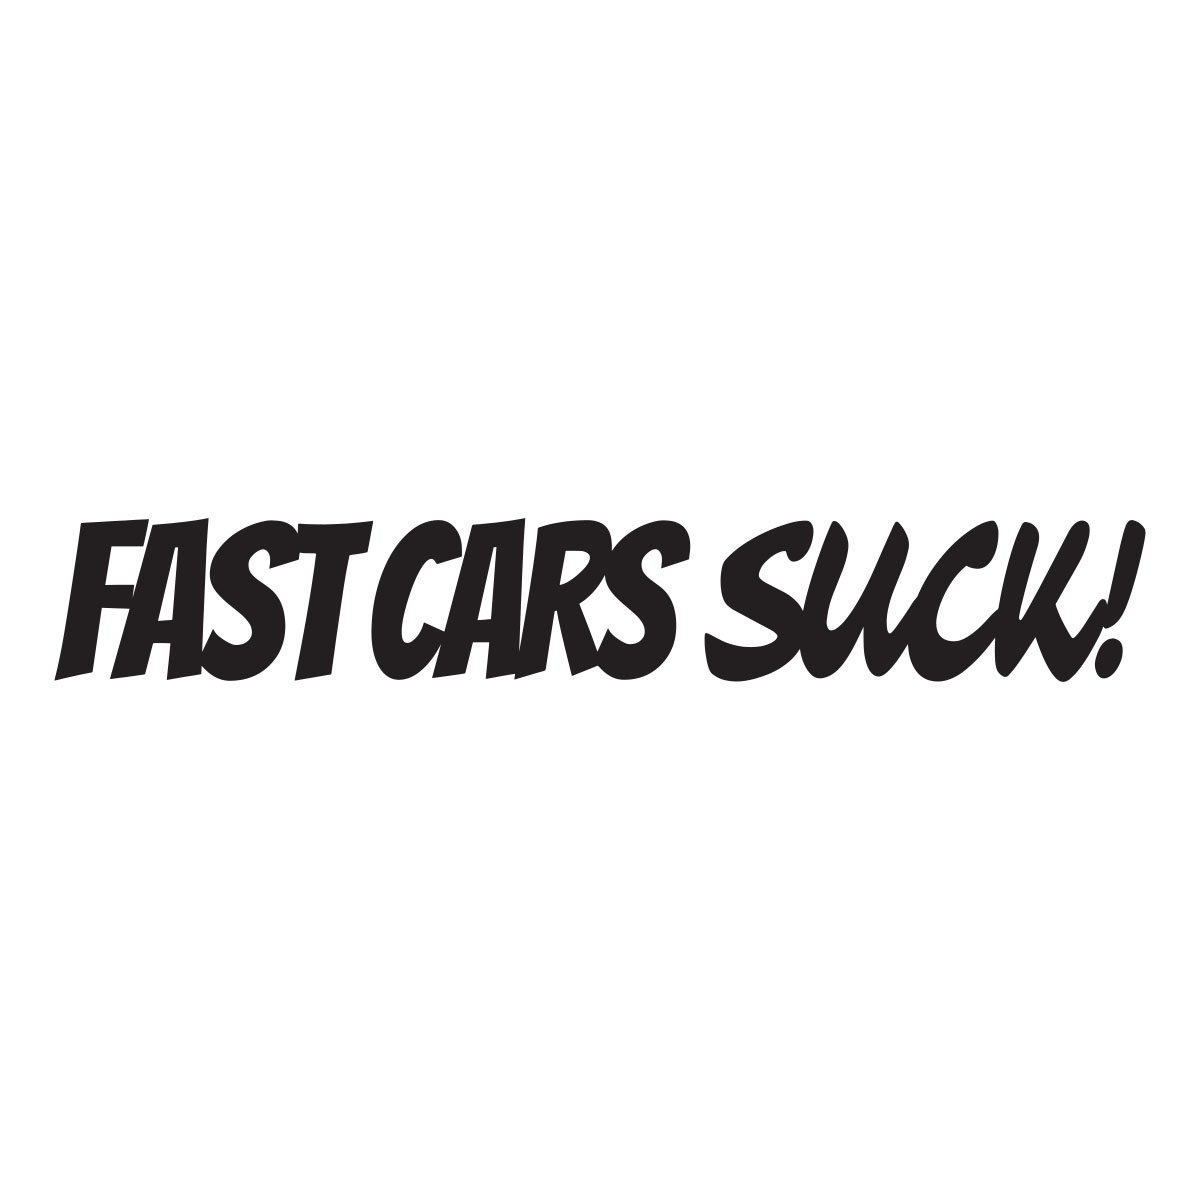 fast cars suck2